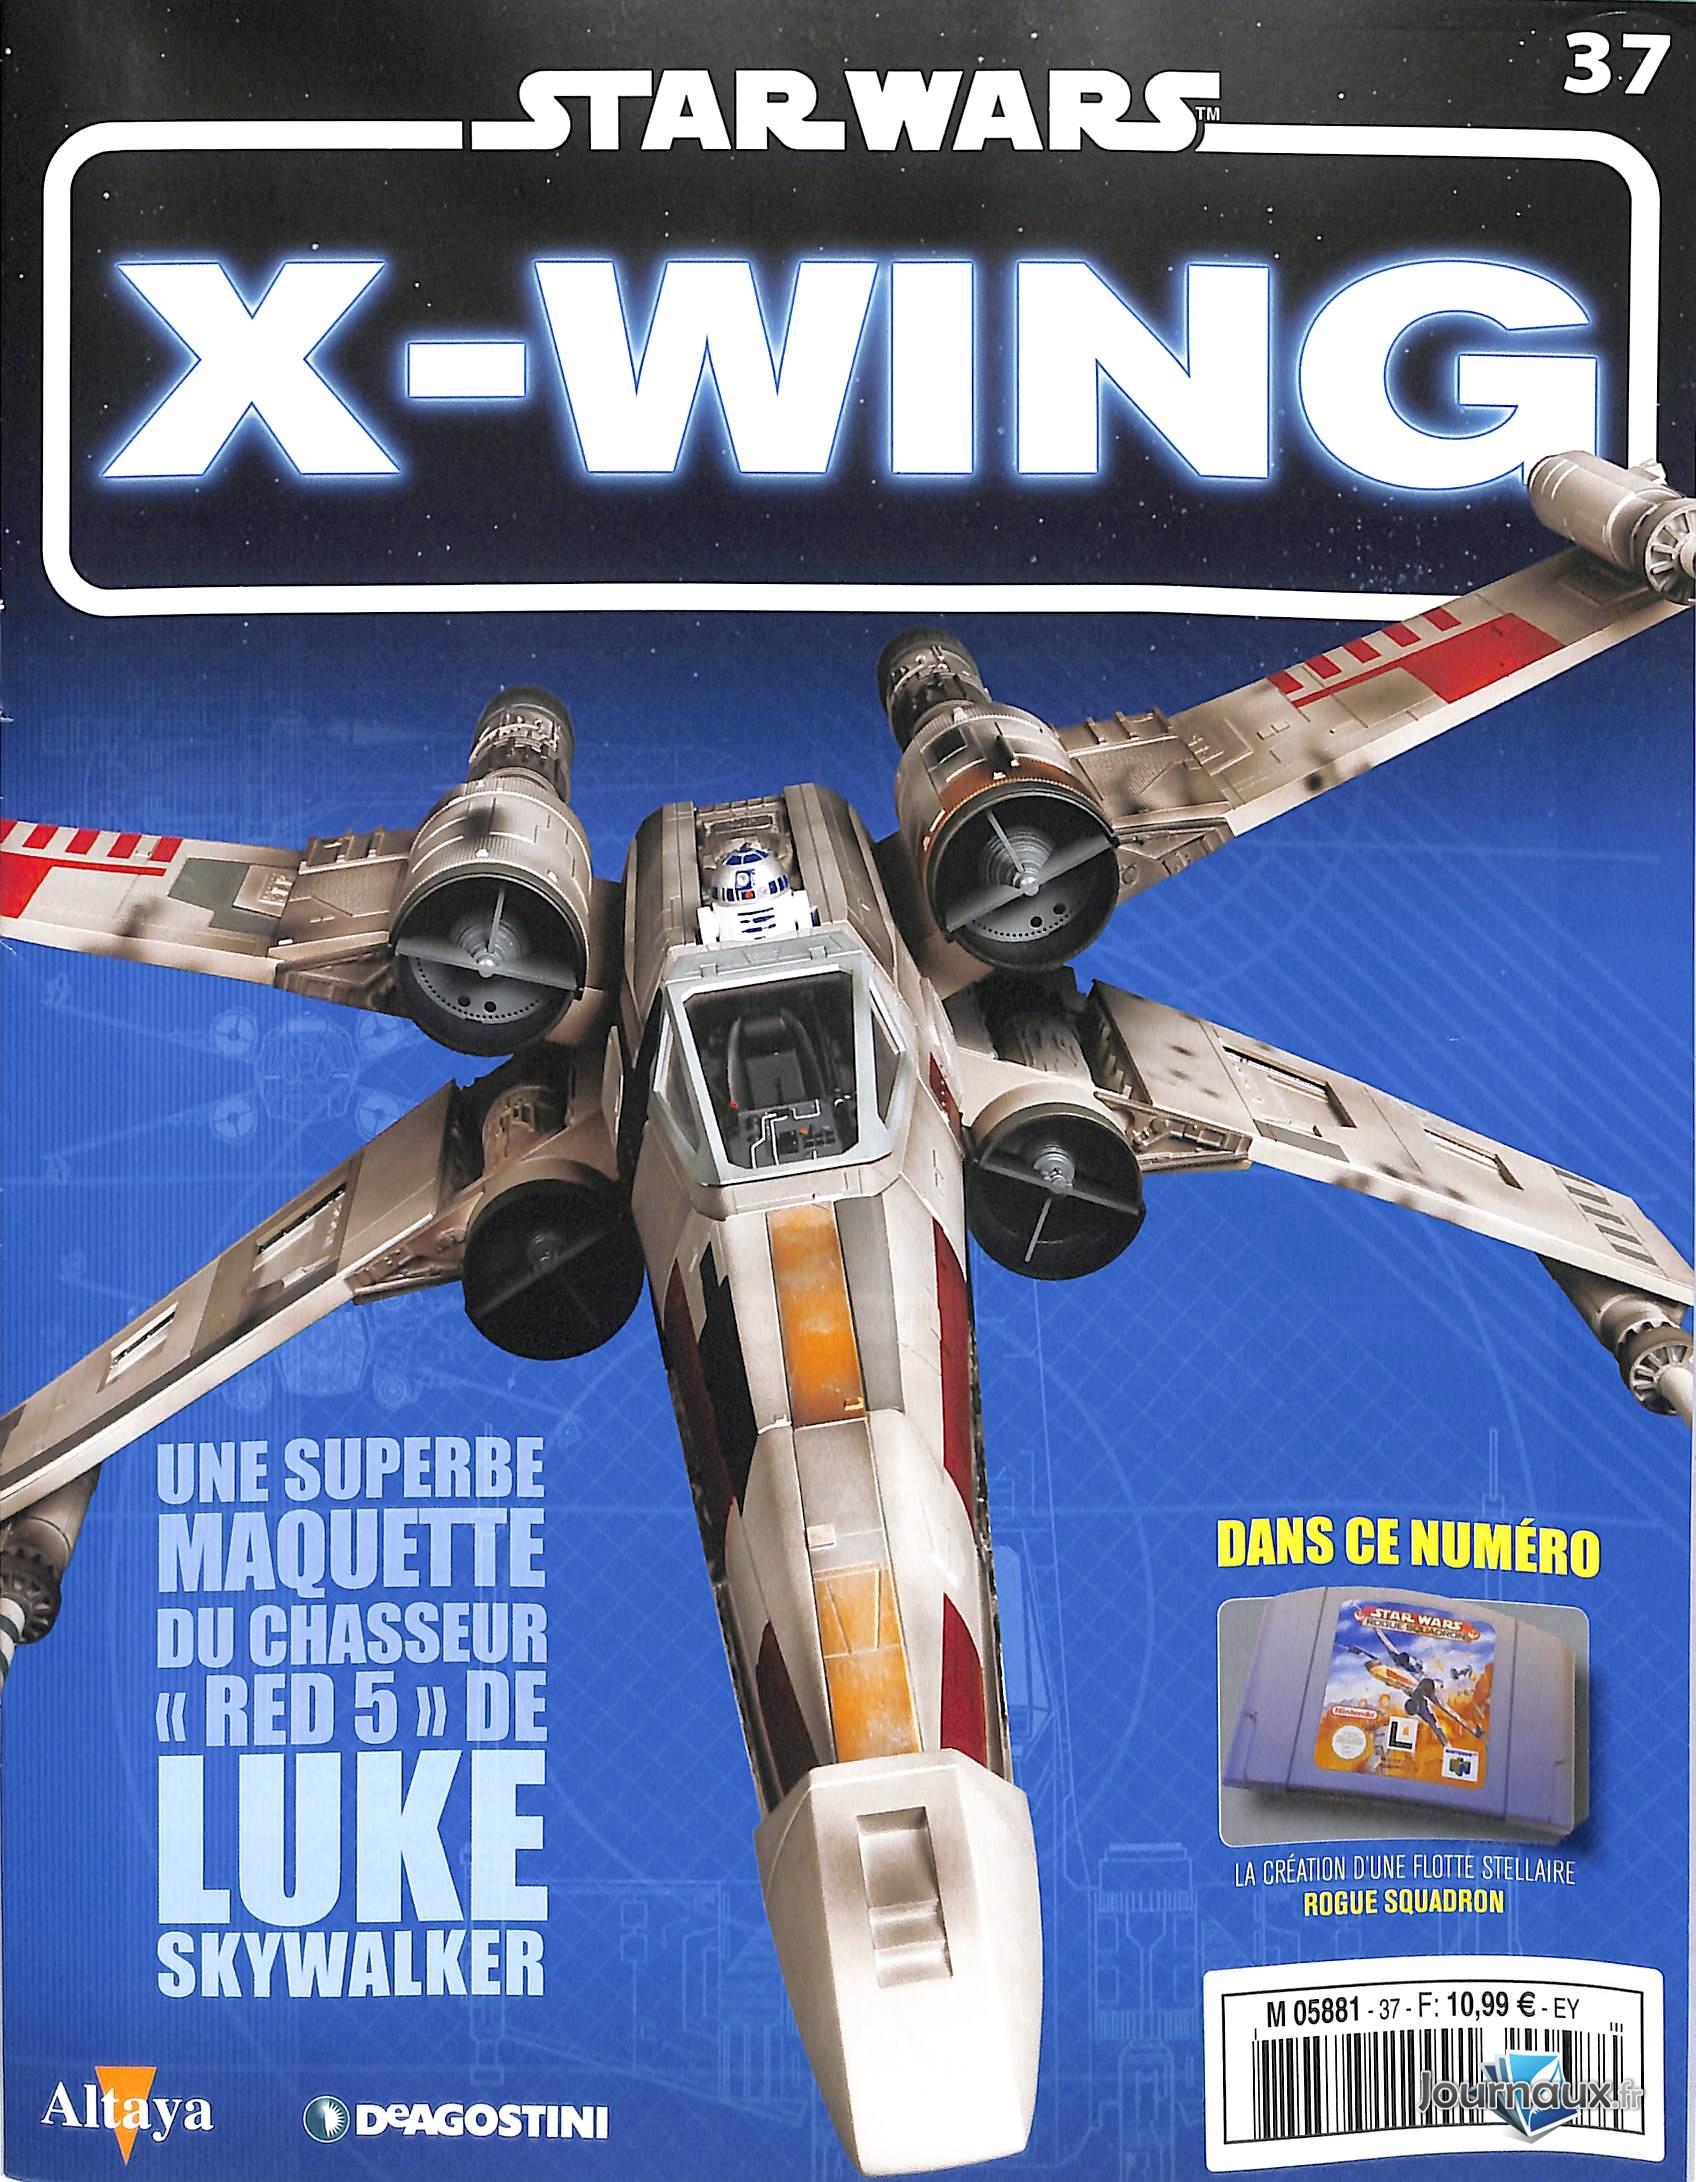 De Agostini-star wars-x wing-luke skywalker-r2d2-Guerre des étoiles-COLLECTION-NEUF 